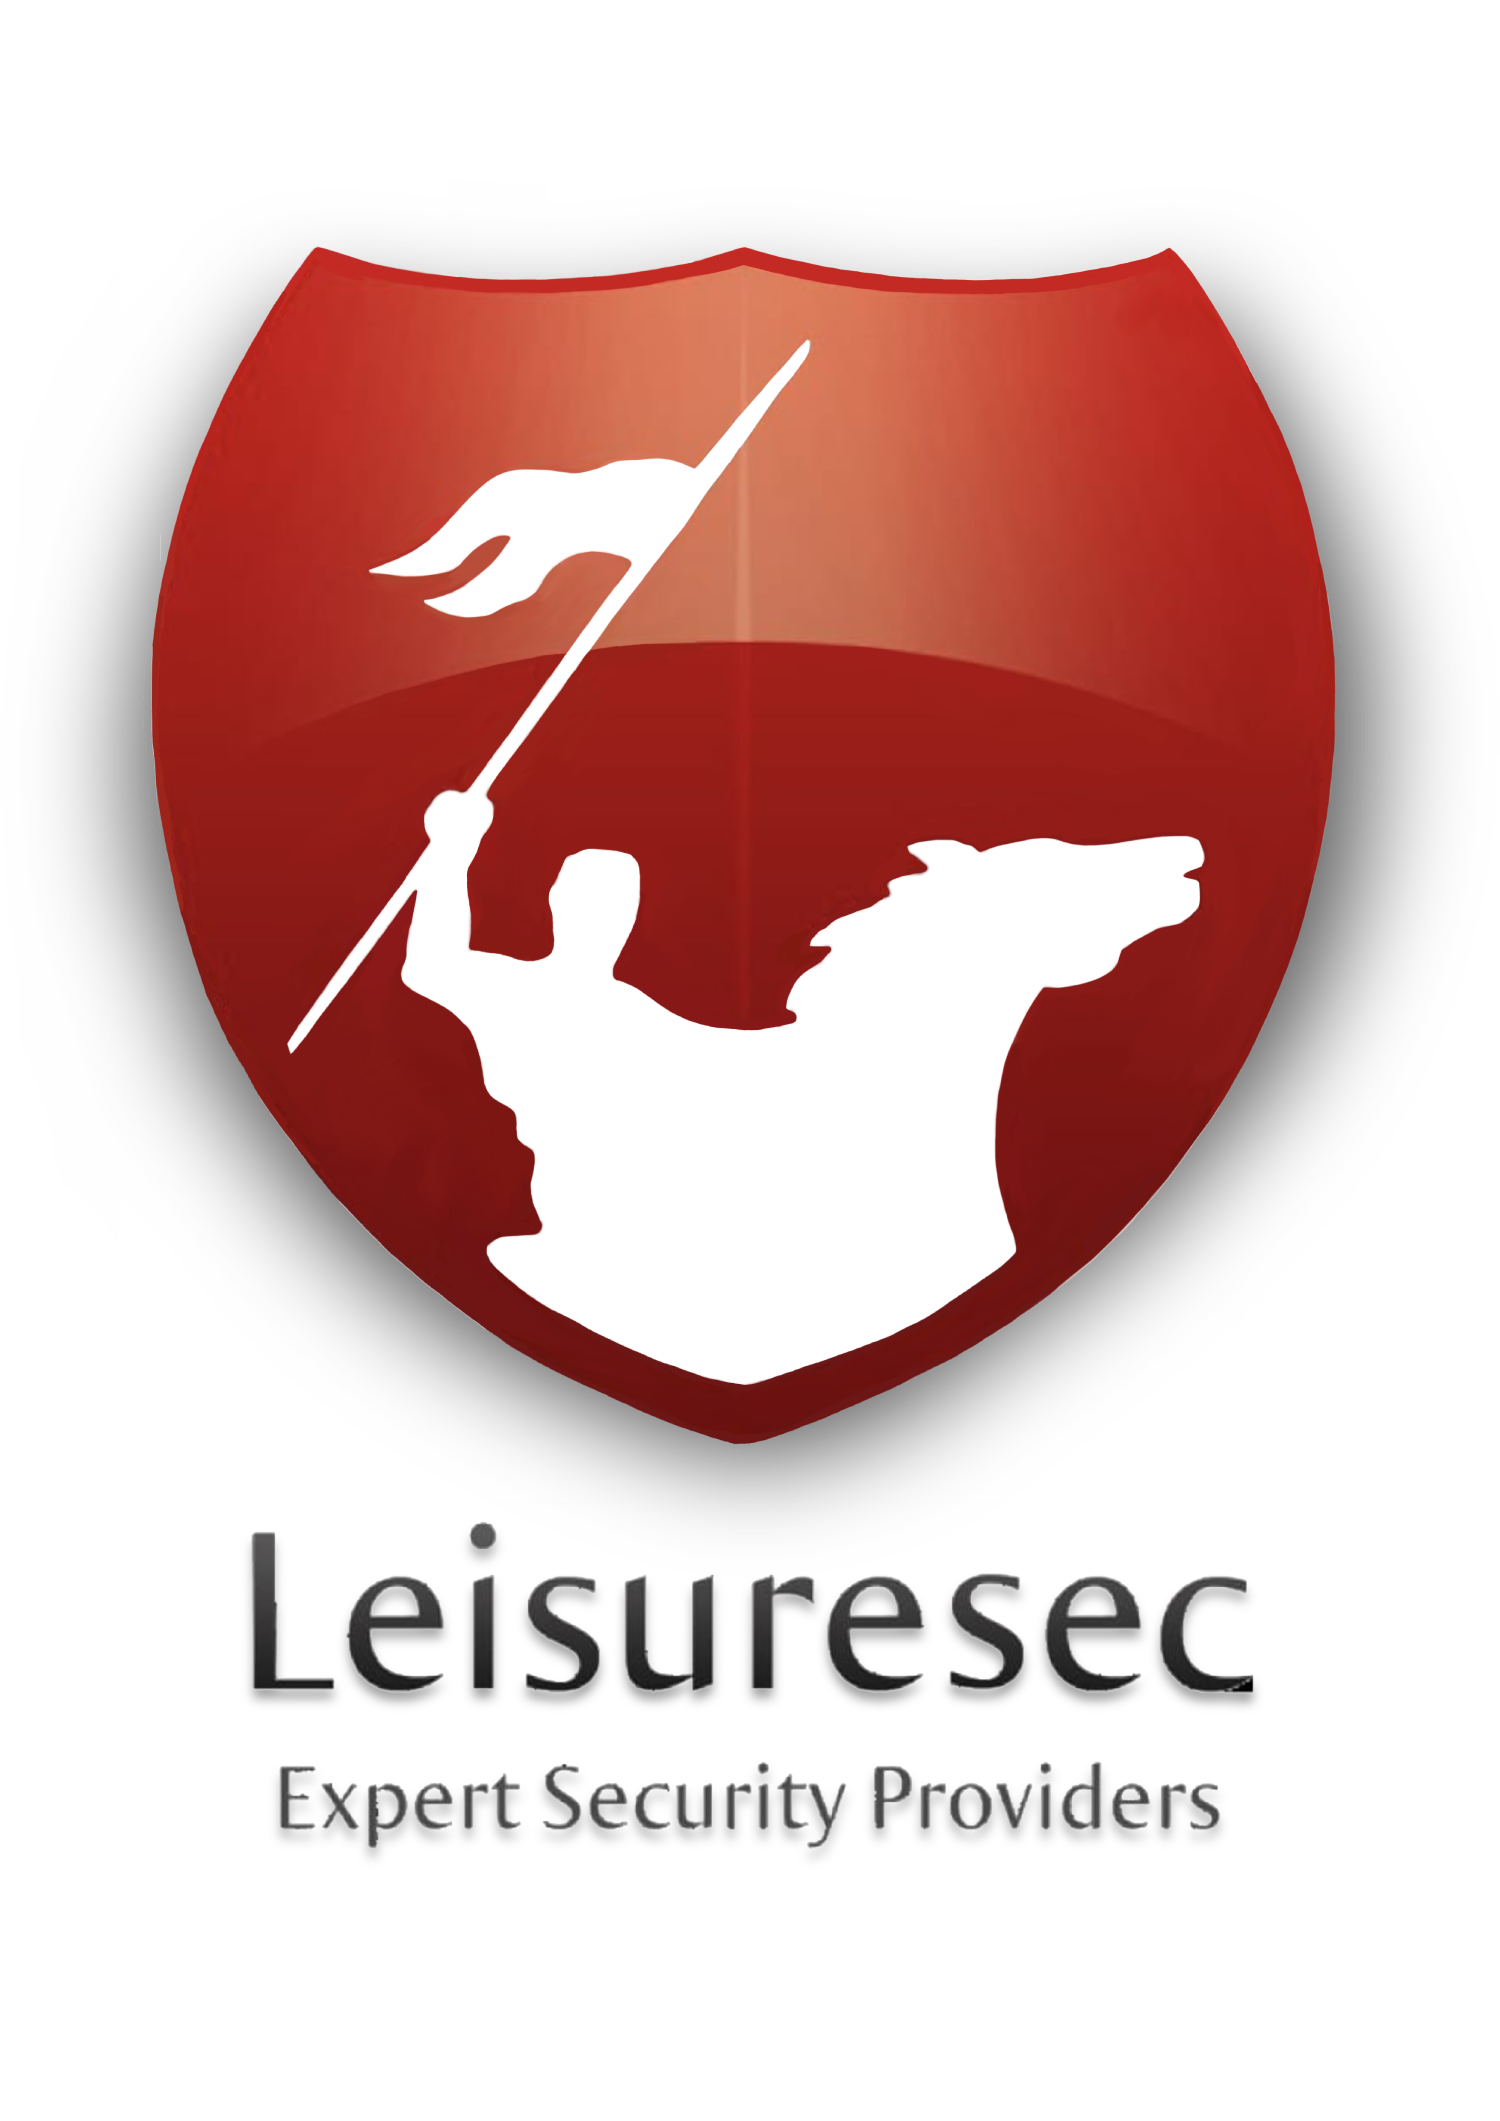 Leisuresec Portal